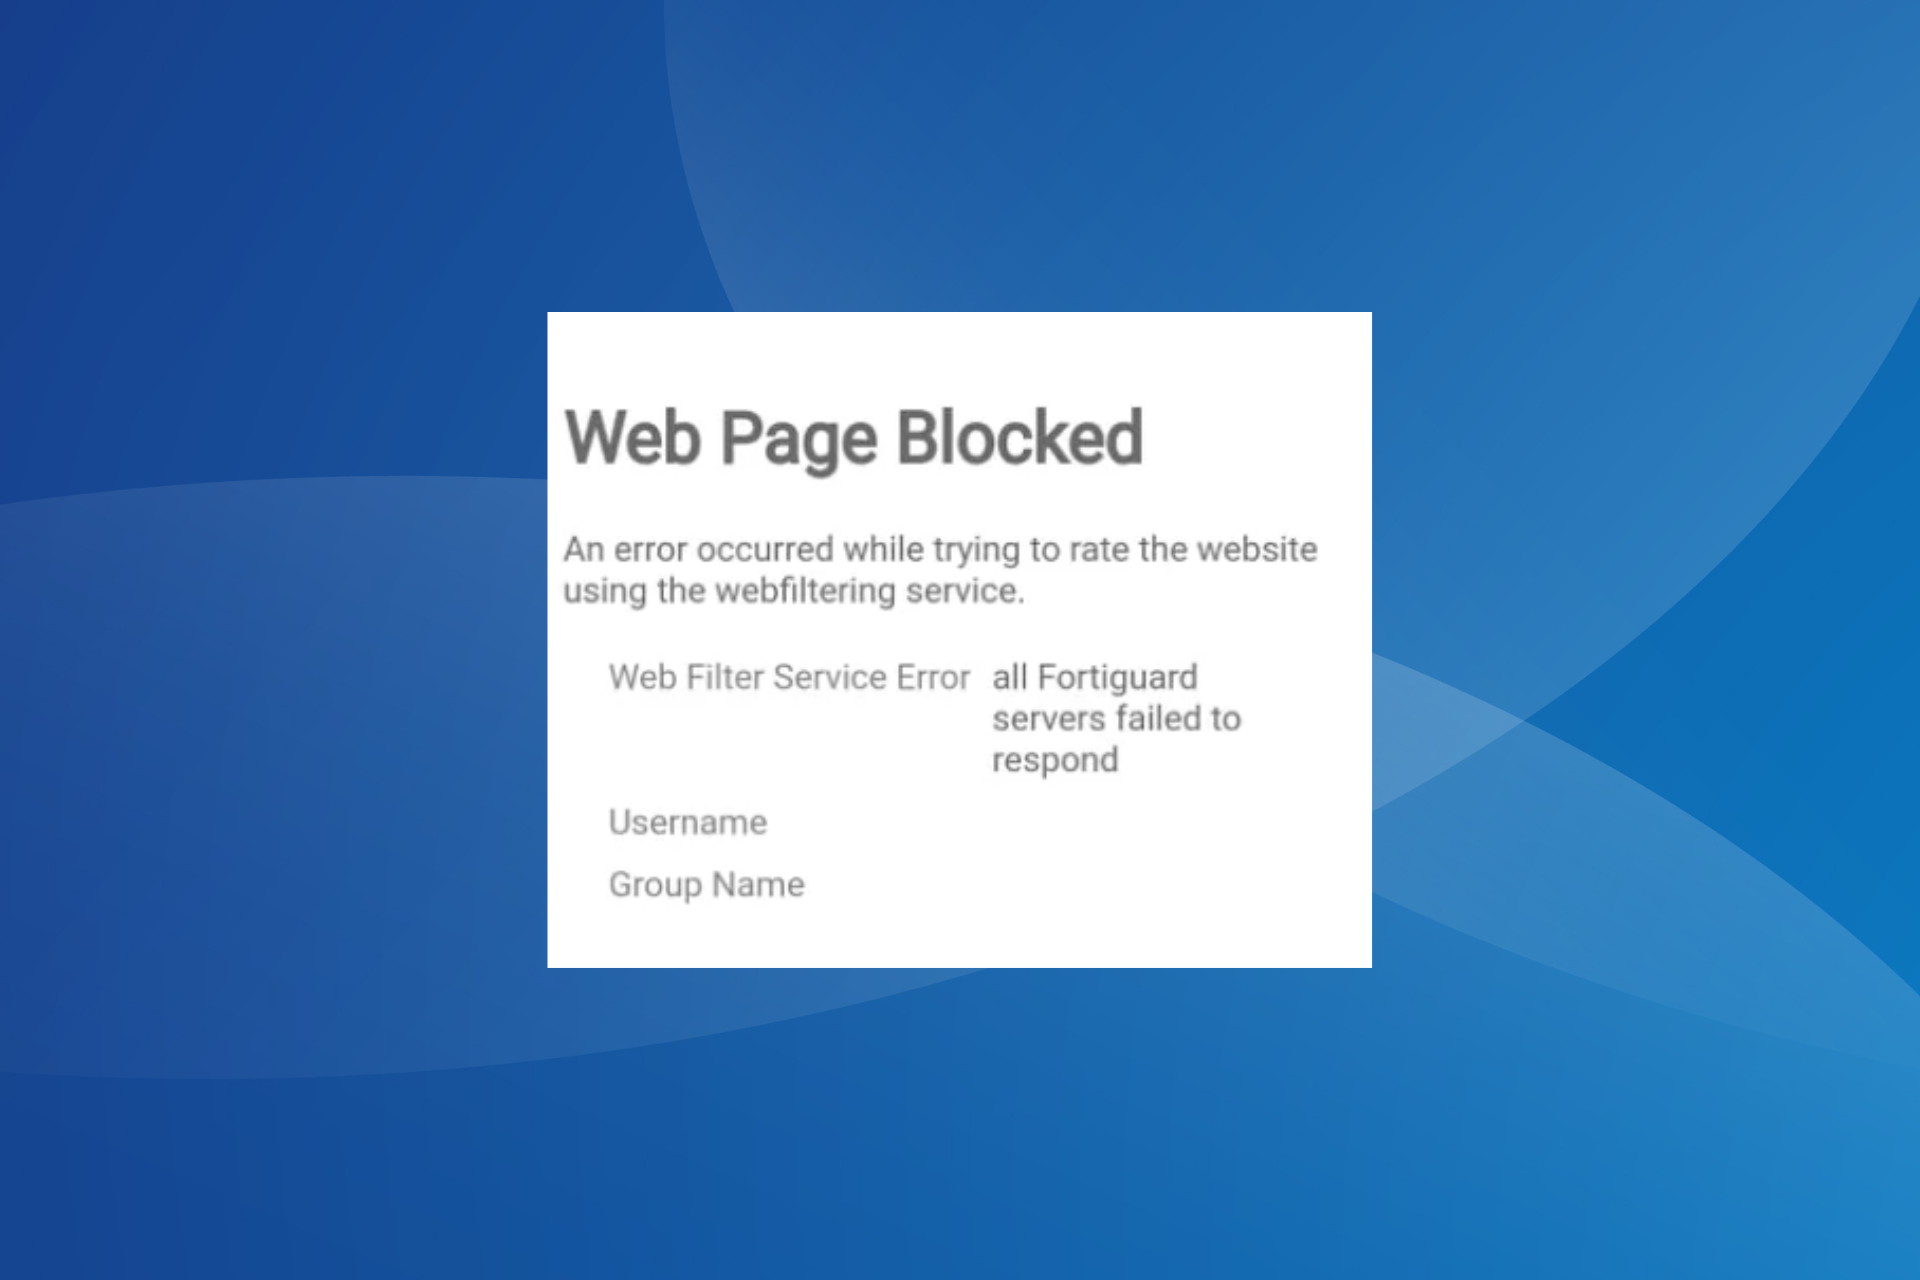 Fix Web Filter Service Error all FortiGuard servers failed to respond